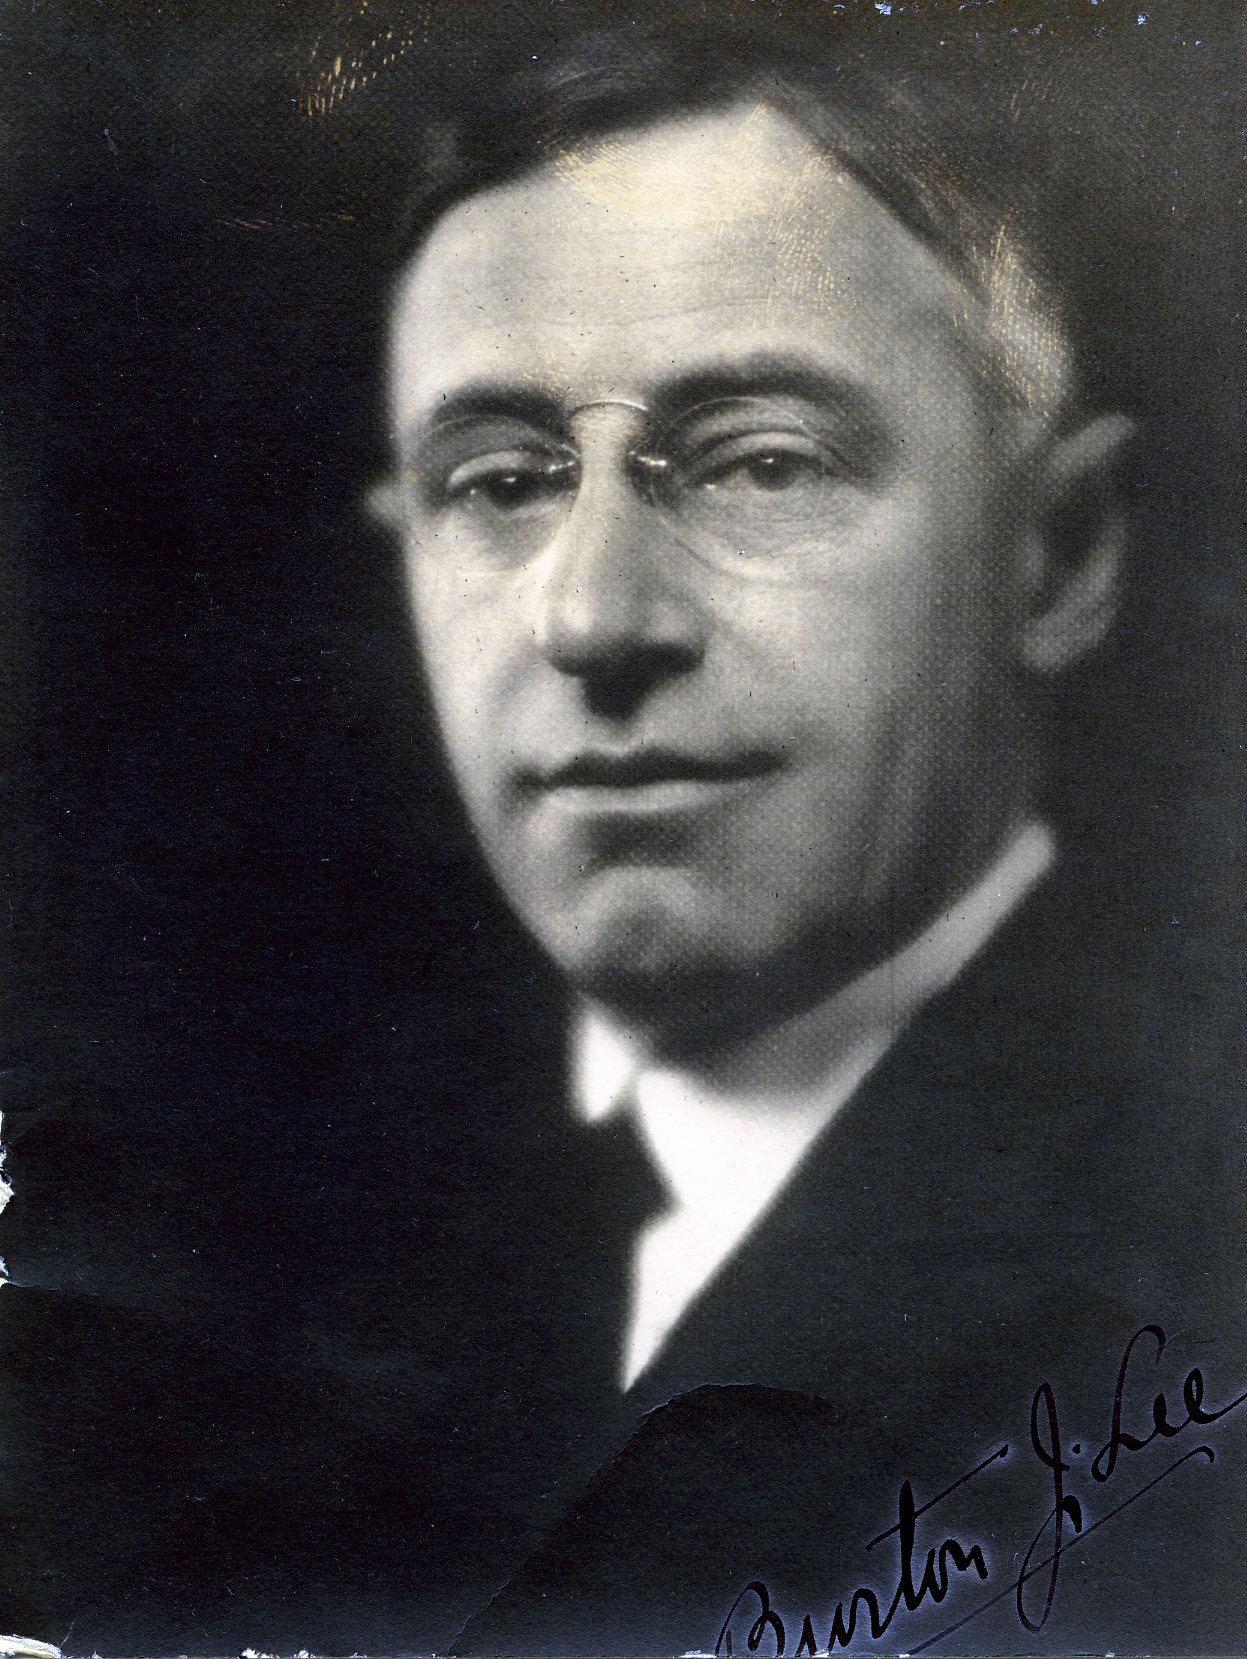 Member portrait of Burton James Lee